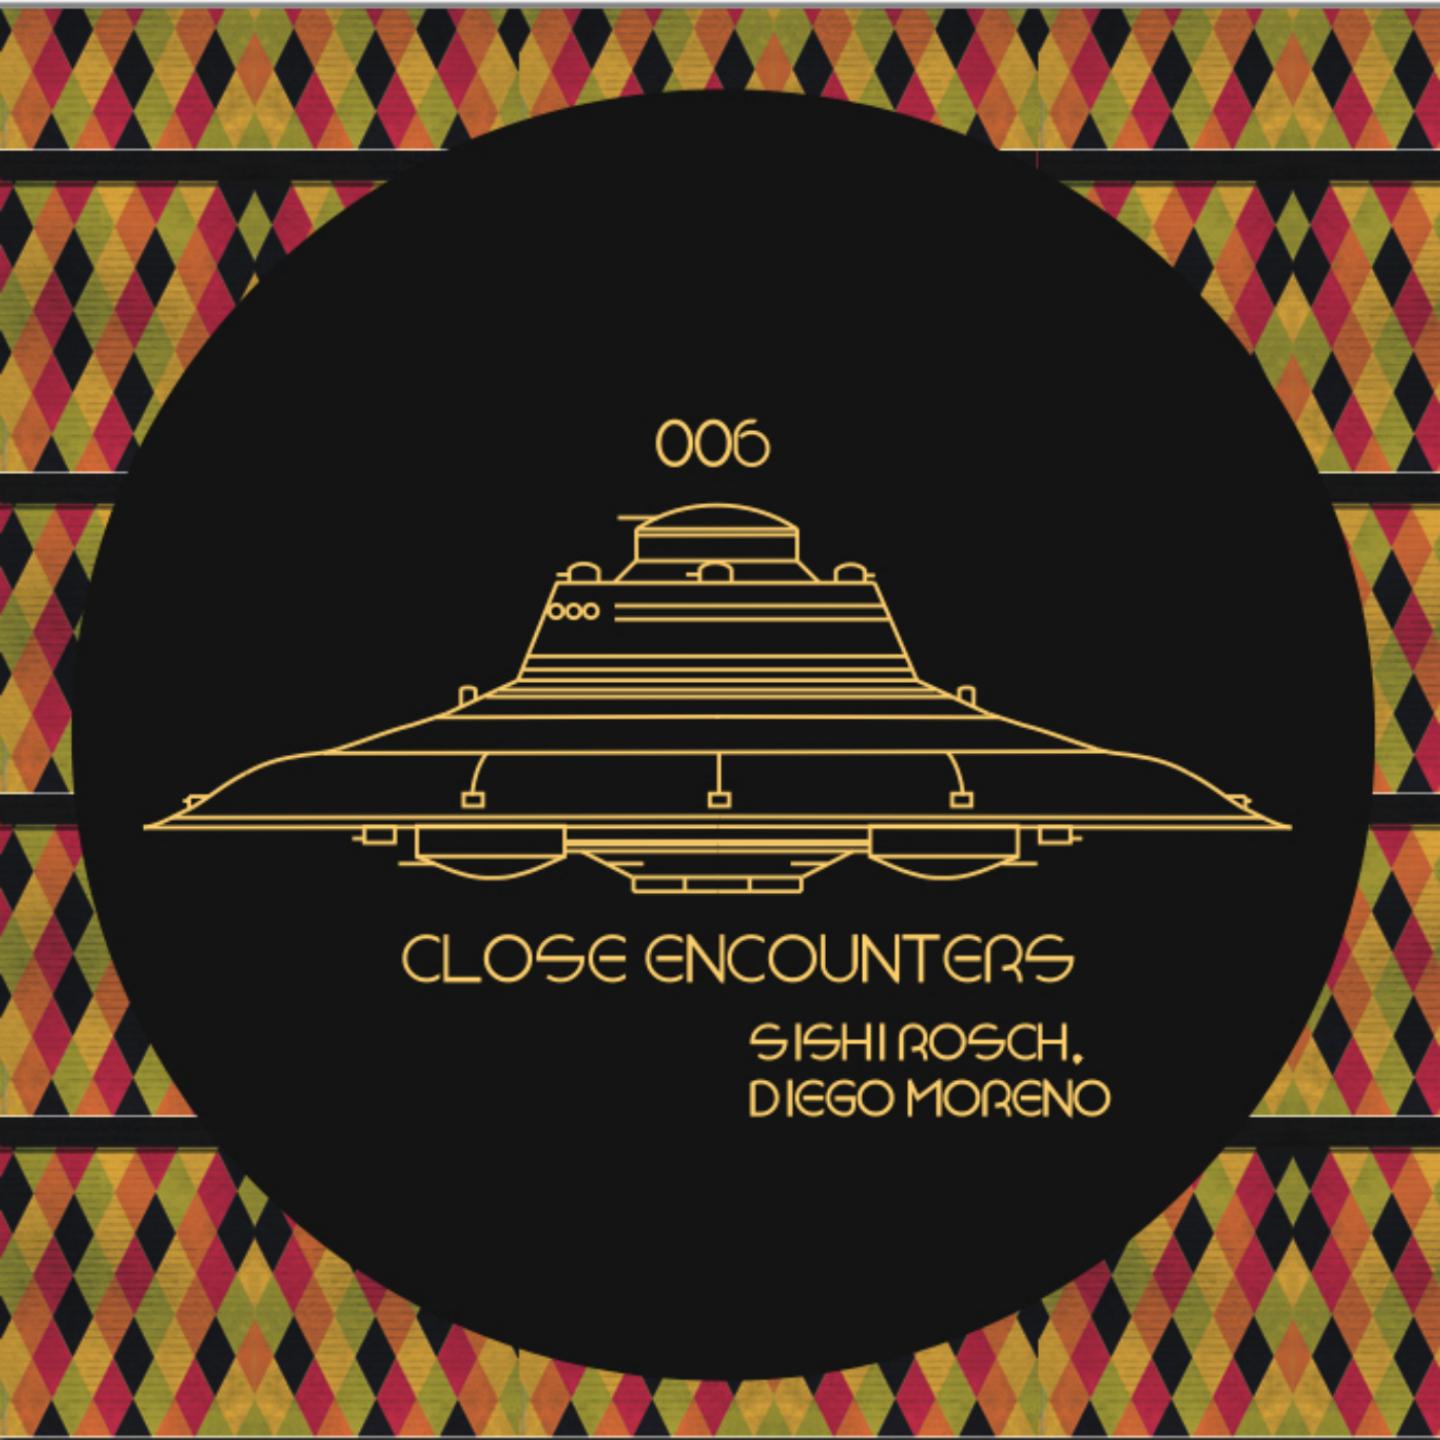 Close Encounters 006